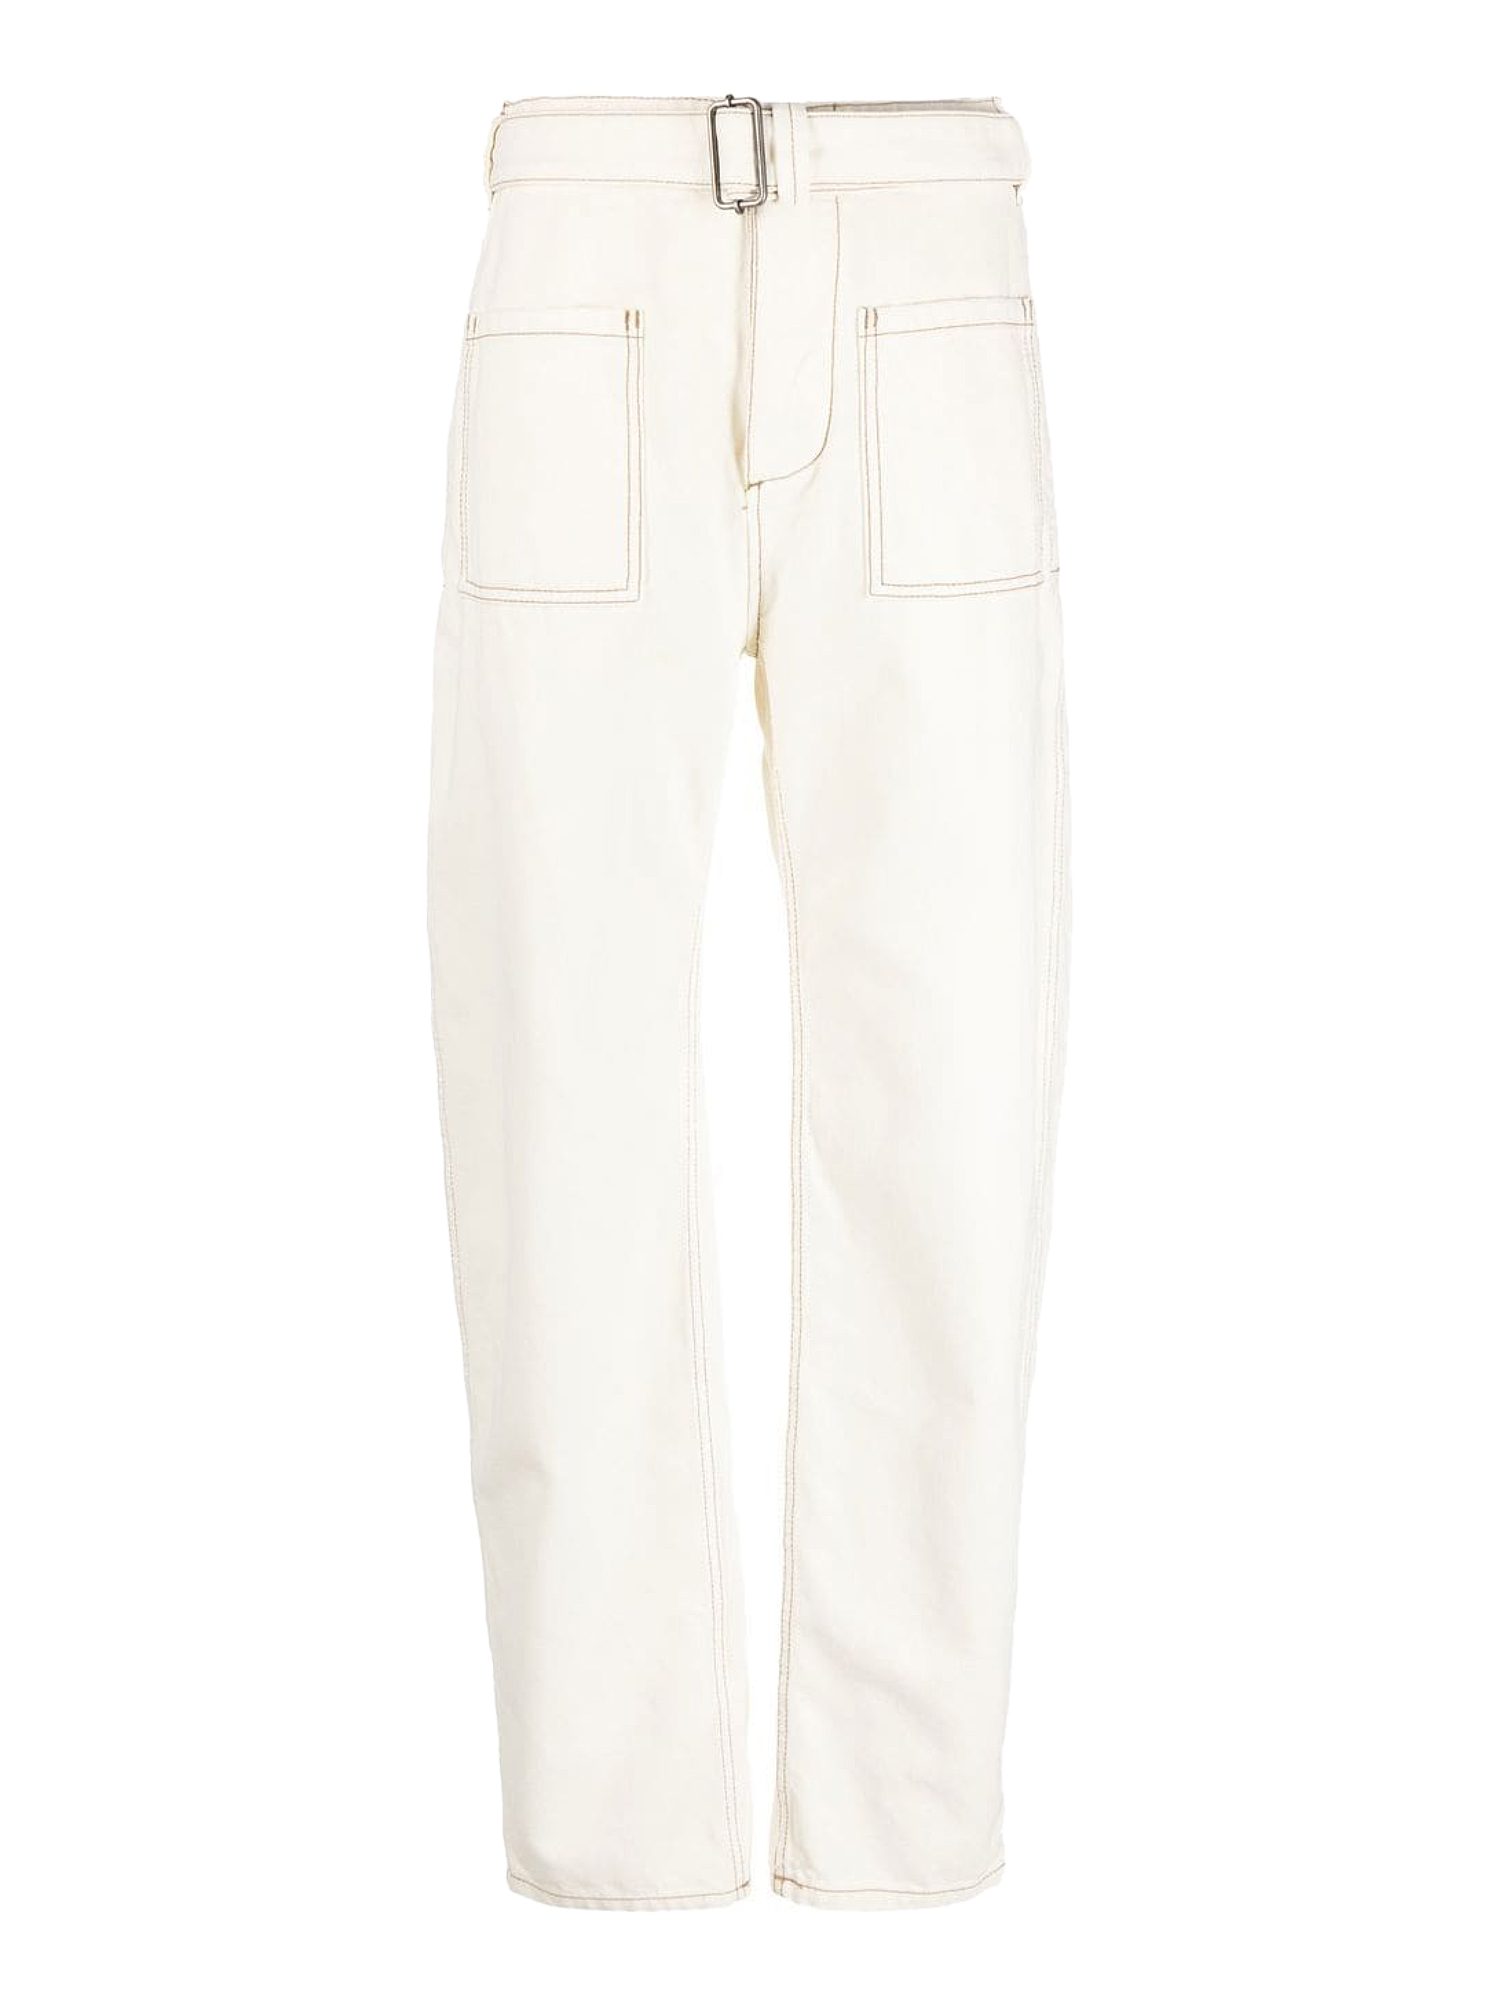 Pantalons Pour Femme - Etro - En Cotton White - Taille:  -